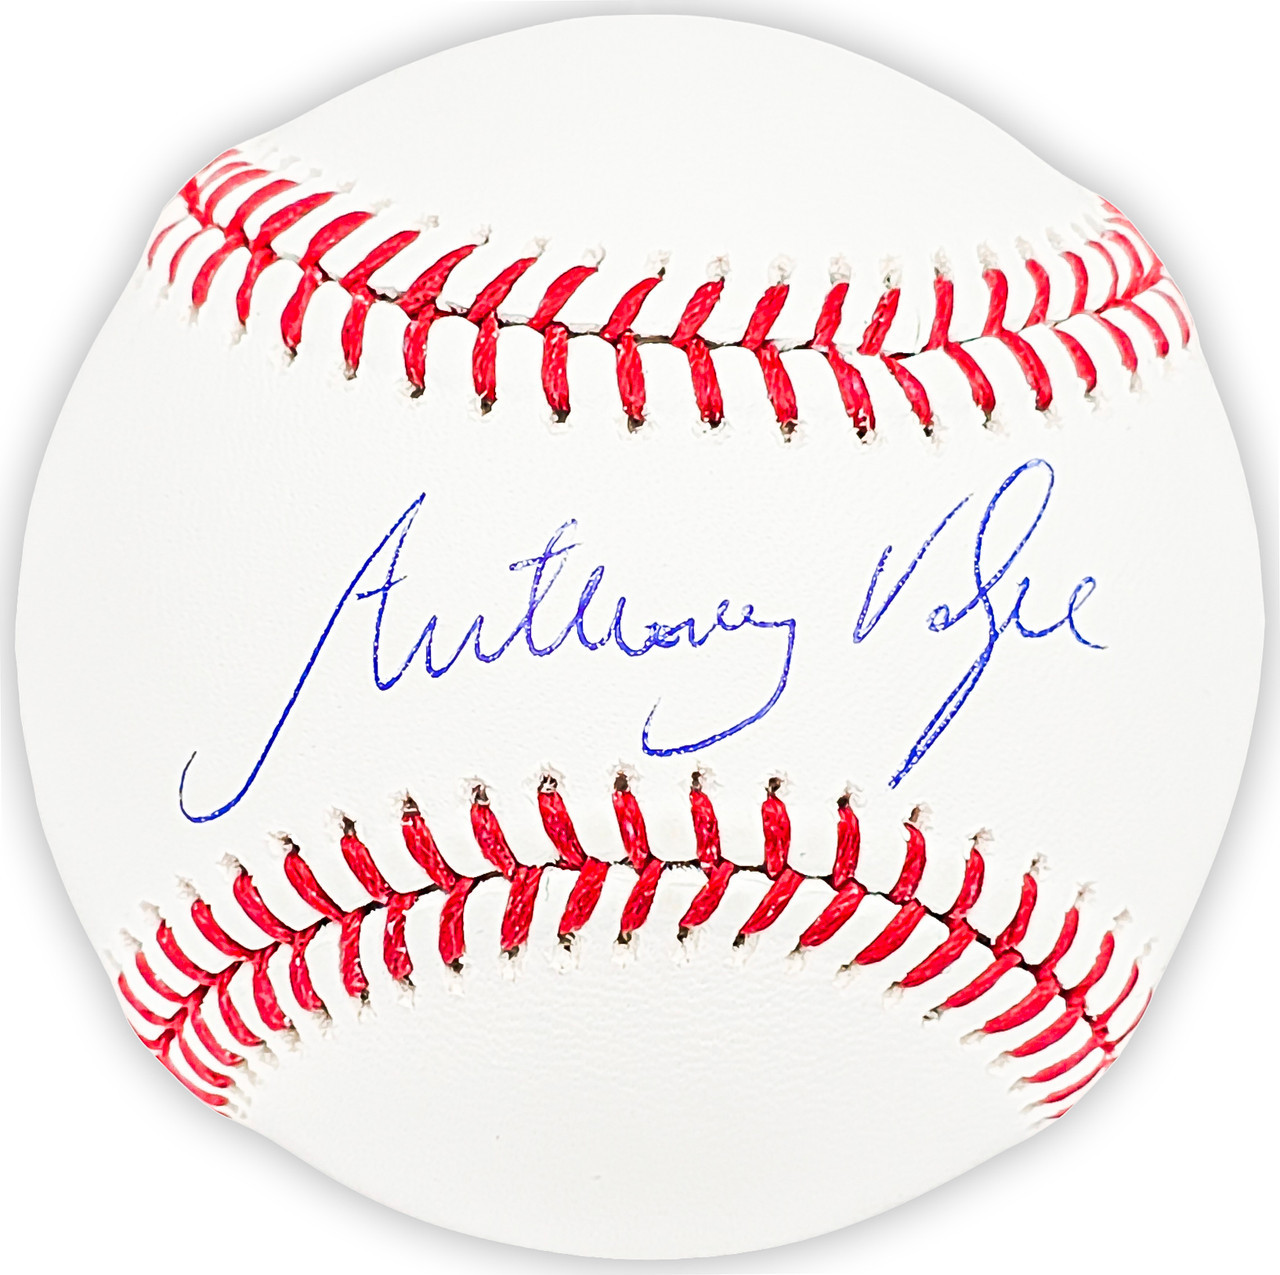 Official Los Angeles Dodgers Collectibles, Dodgers Collectible Memorabilia,  Autographed Merchandise